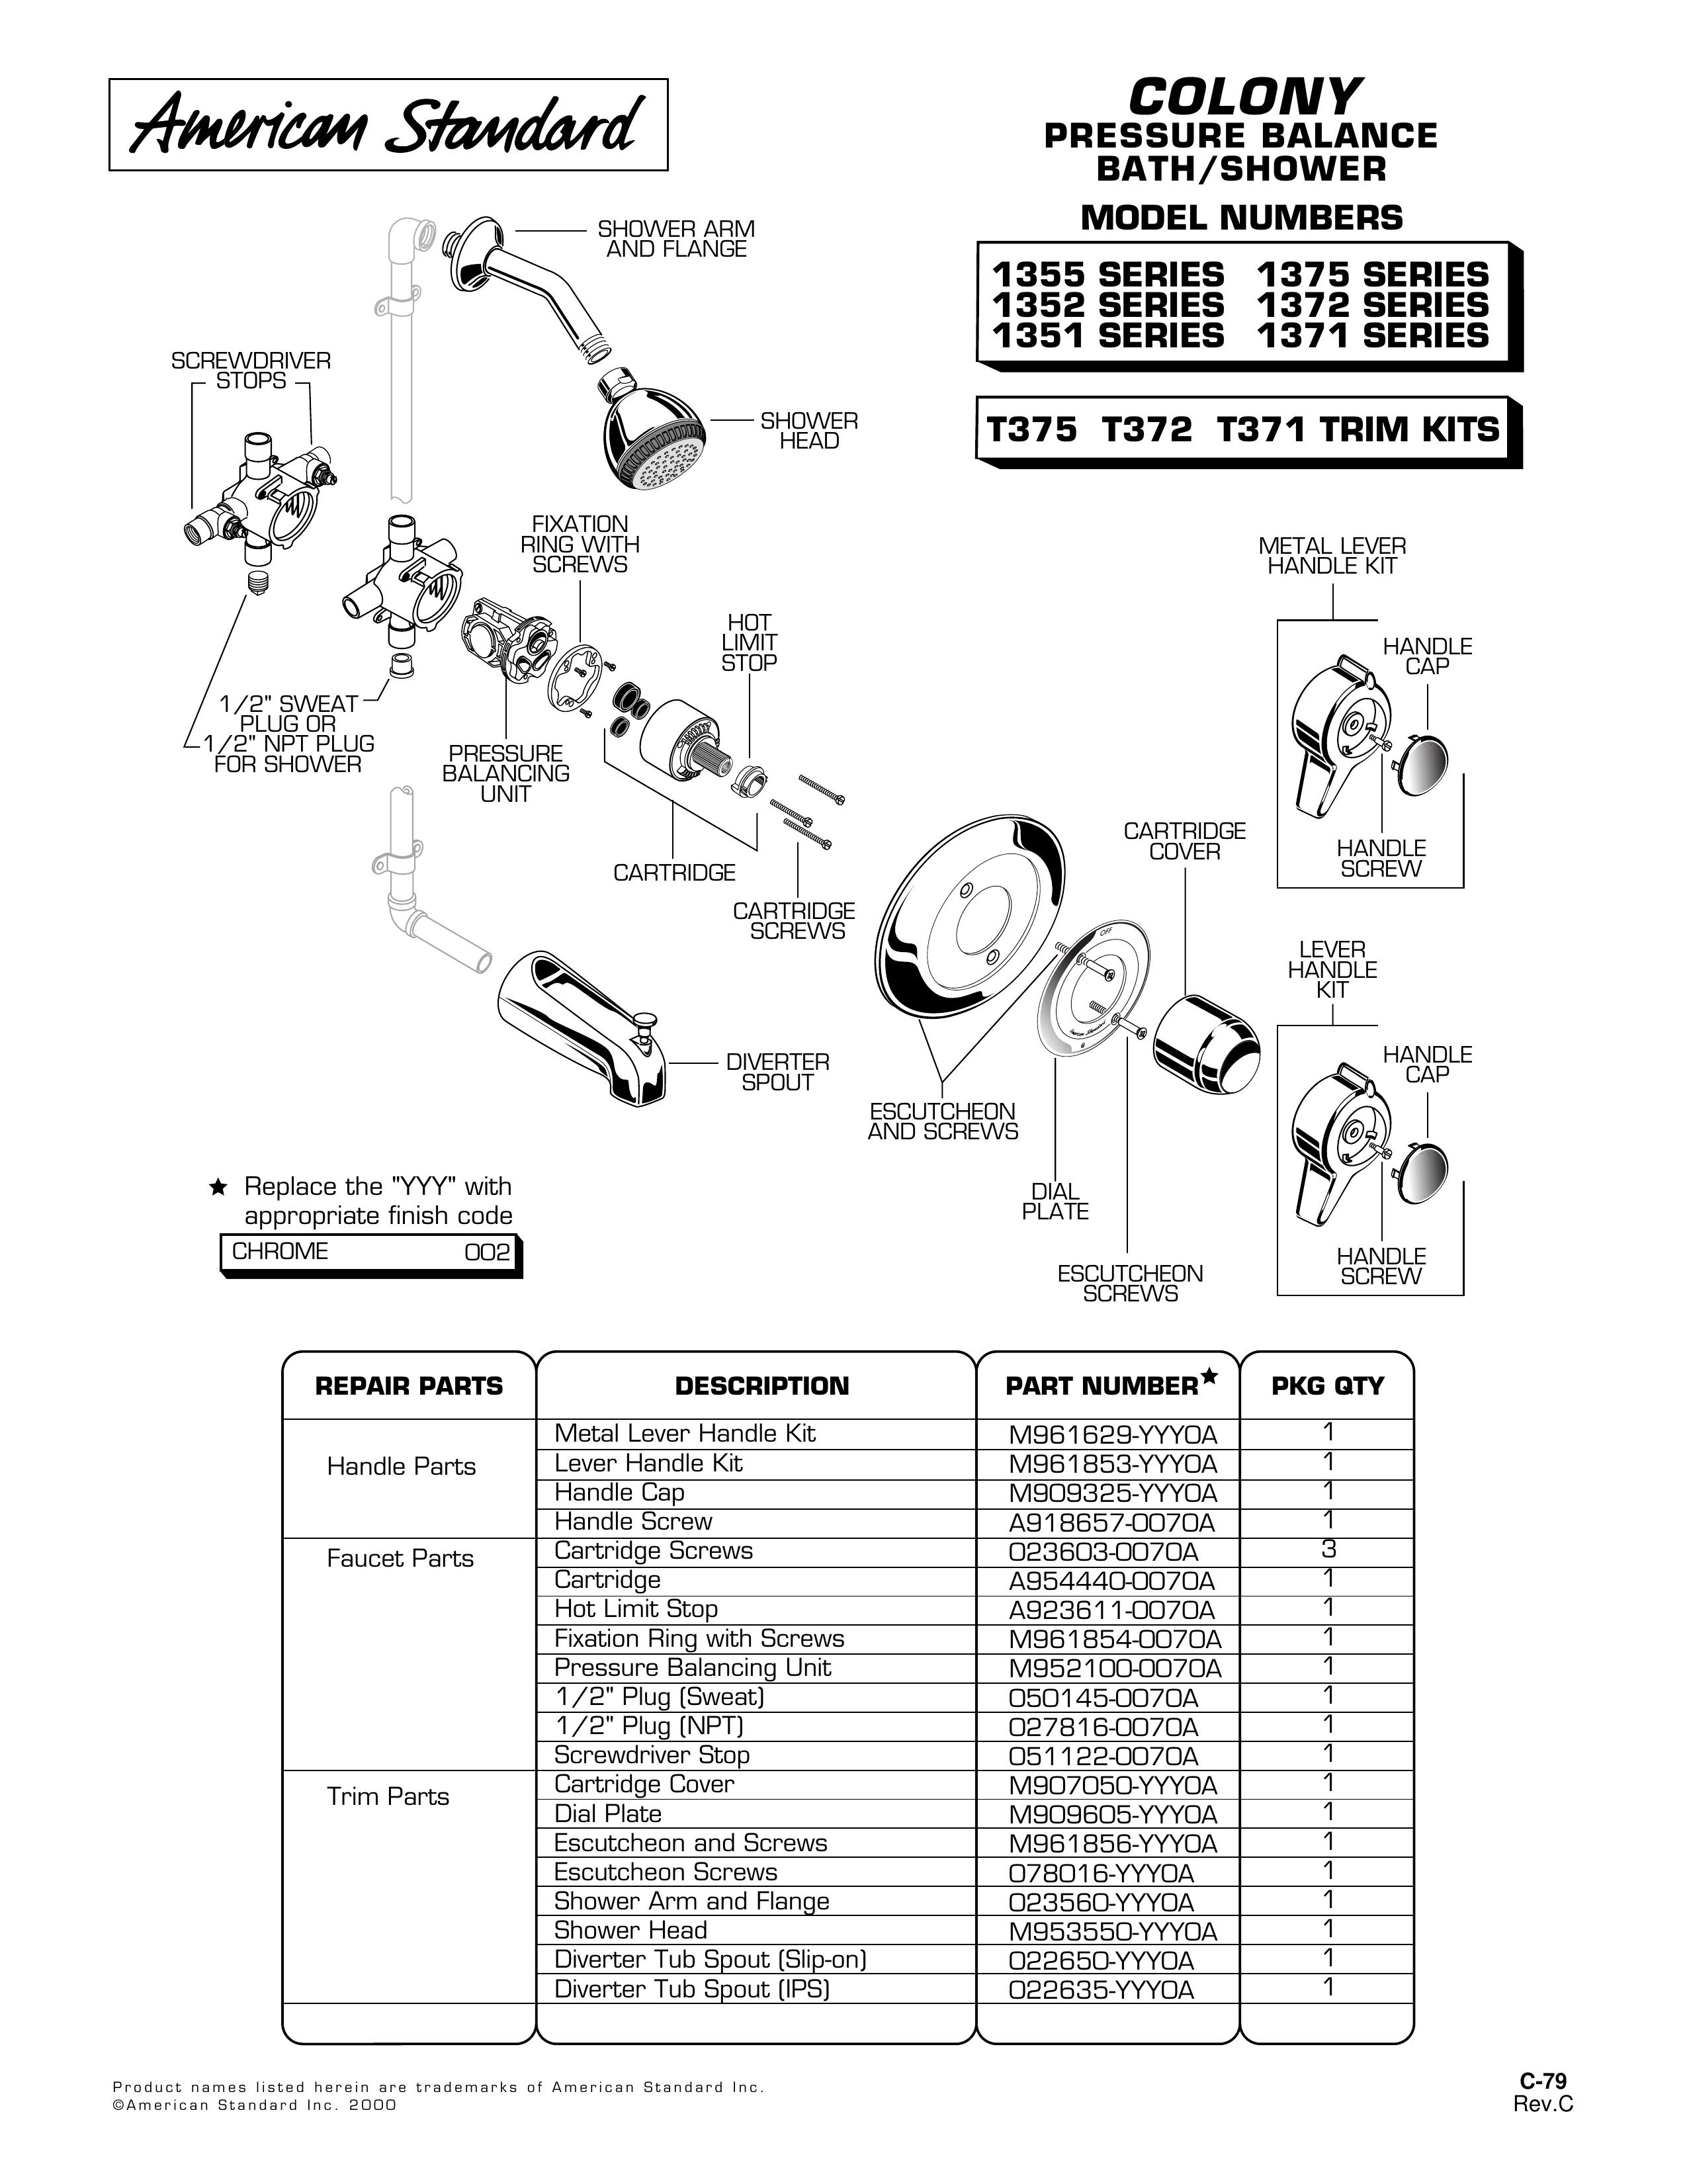 American Standard 1355 SERIES Outdoor Shower User Manual